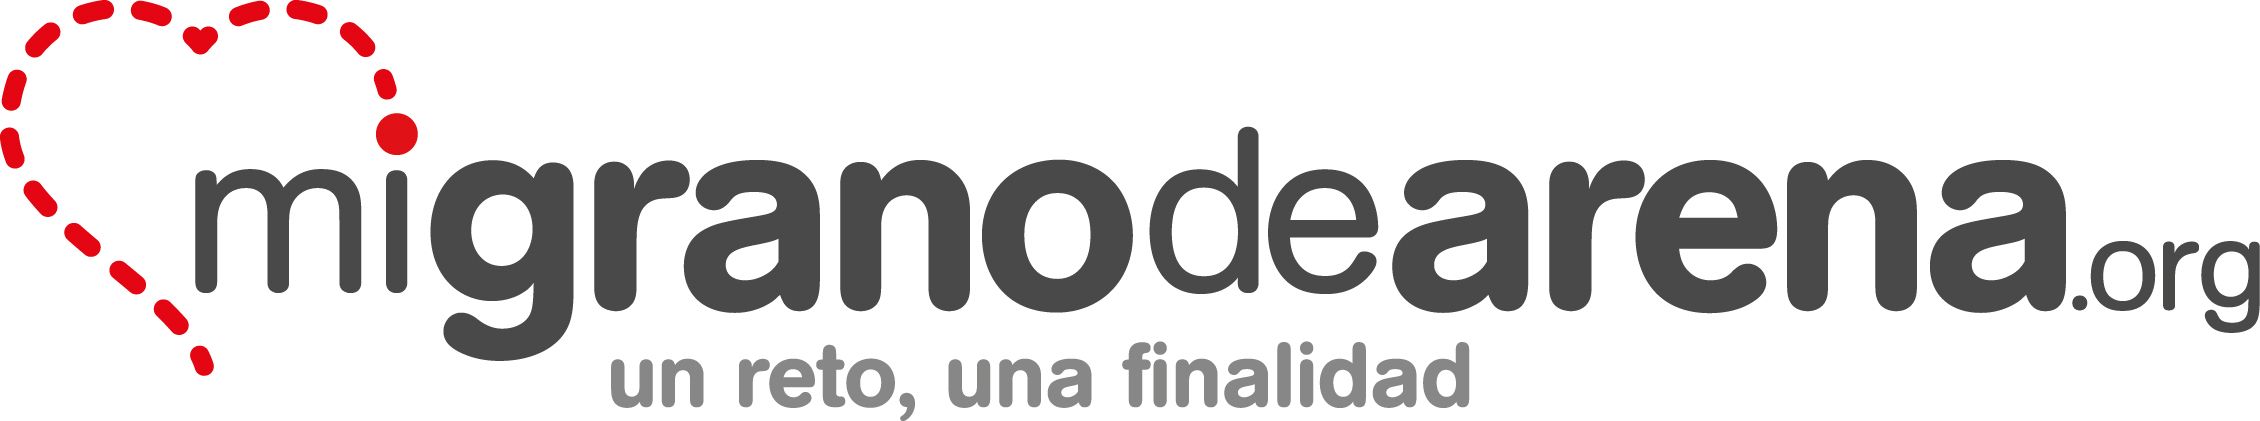 Logo_migranodearena.org_JPG